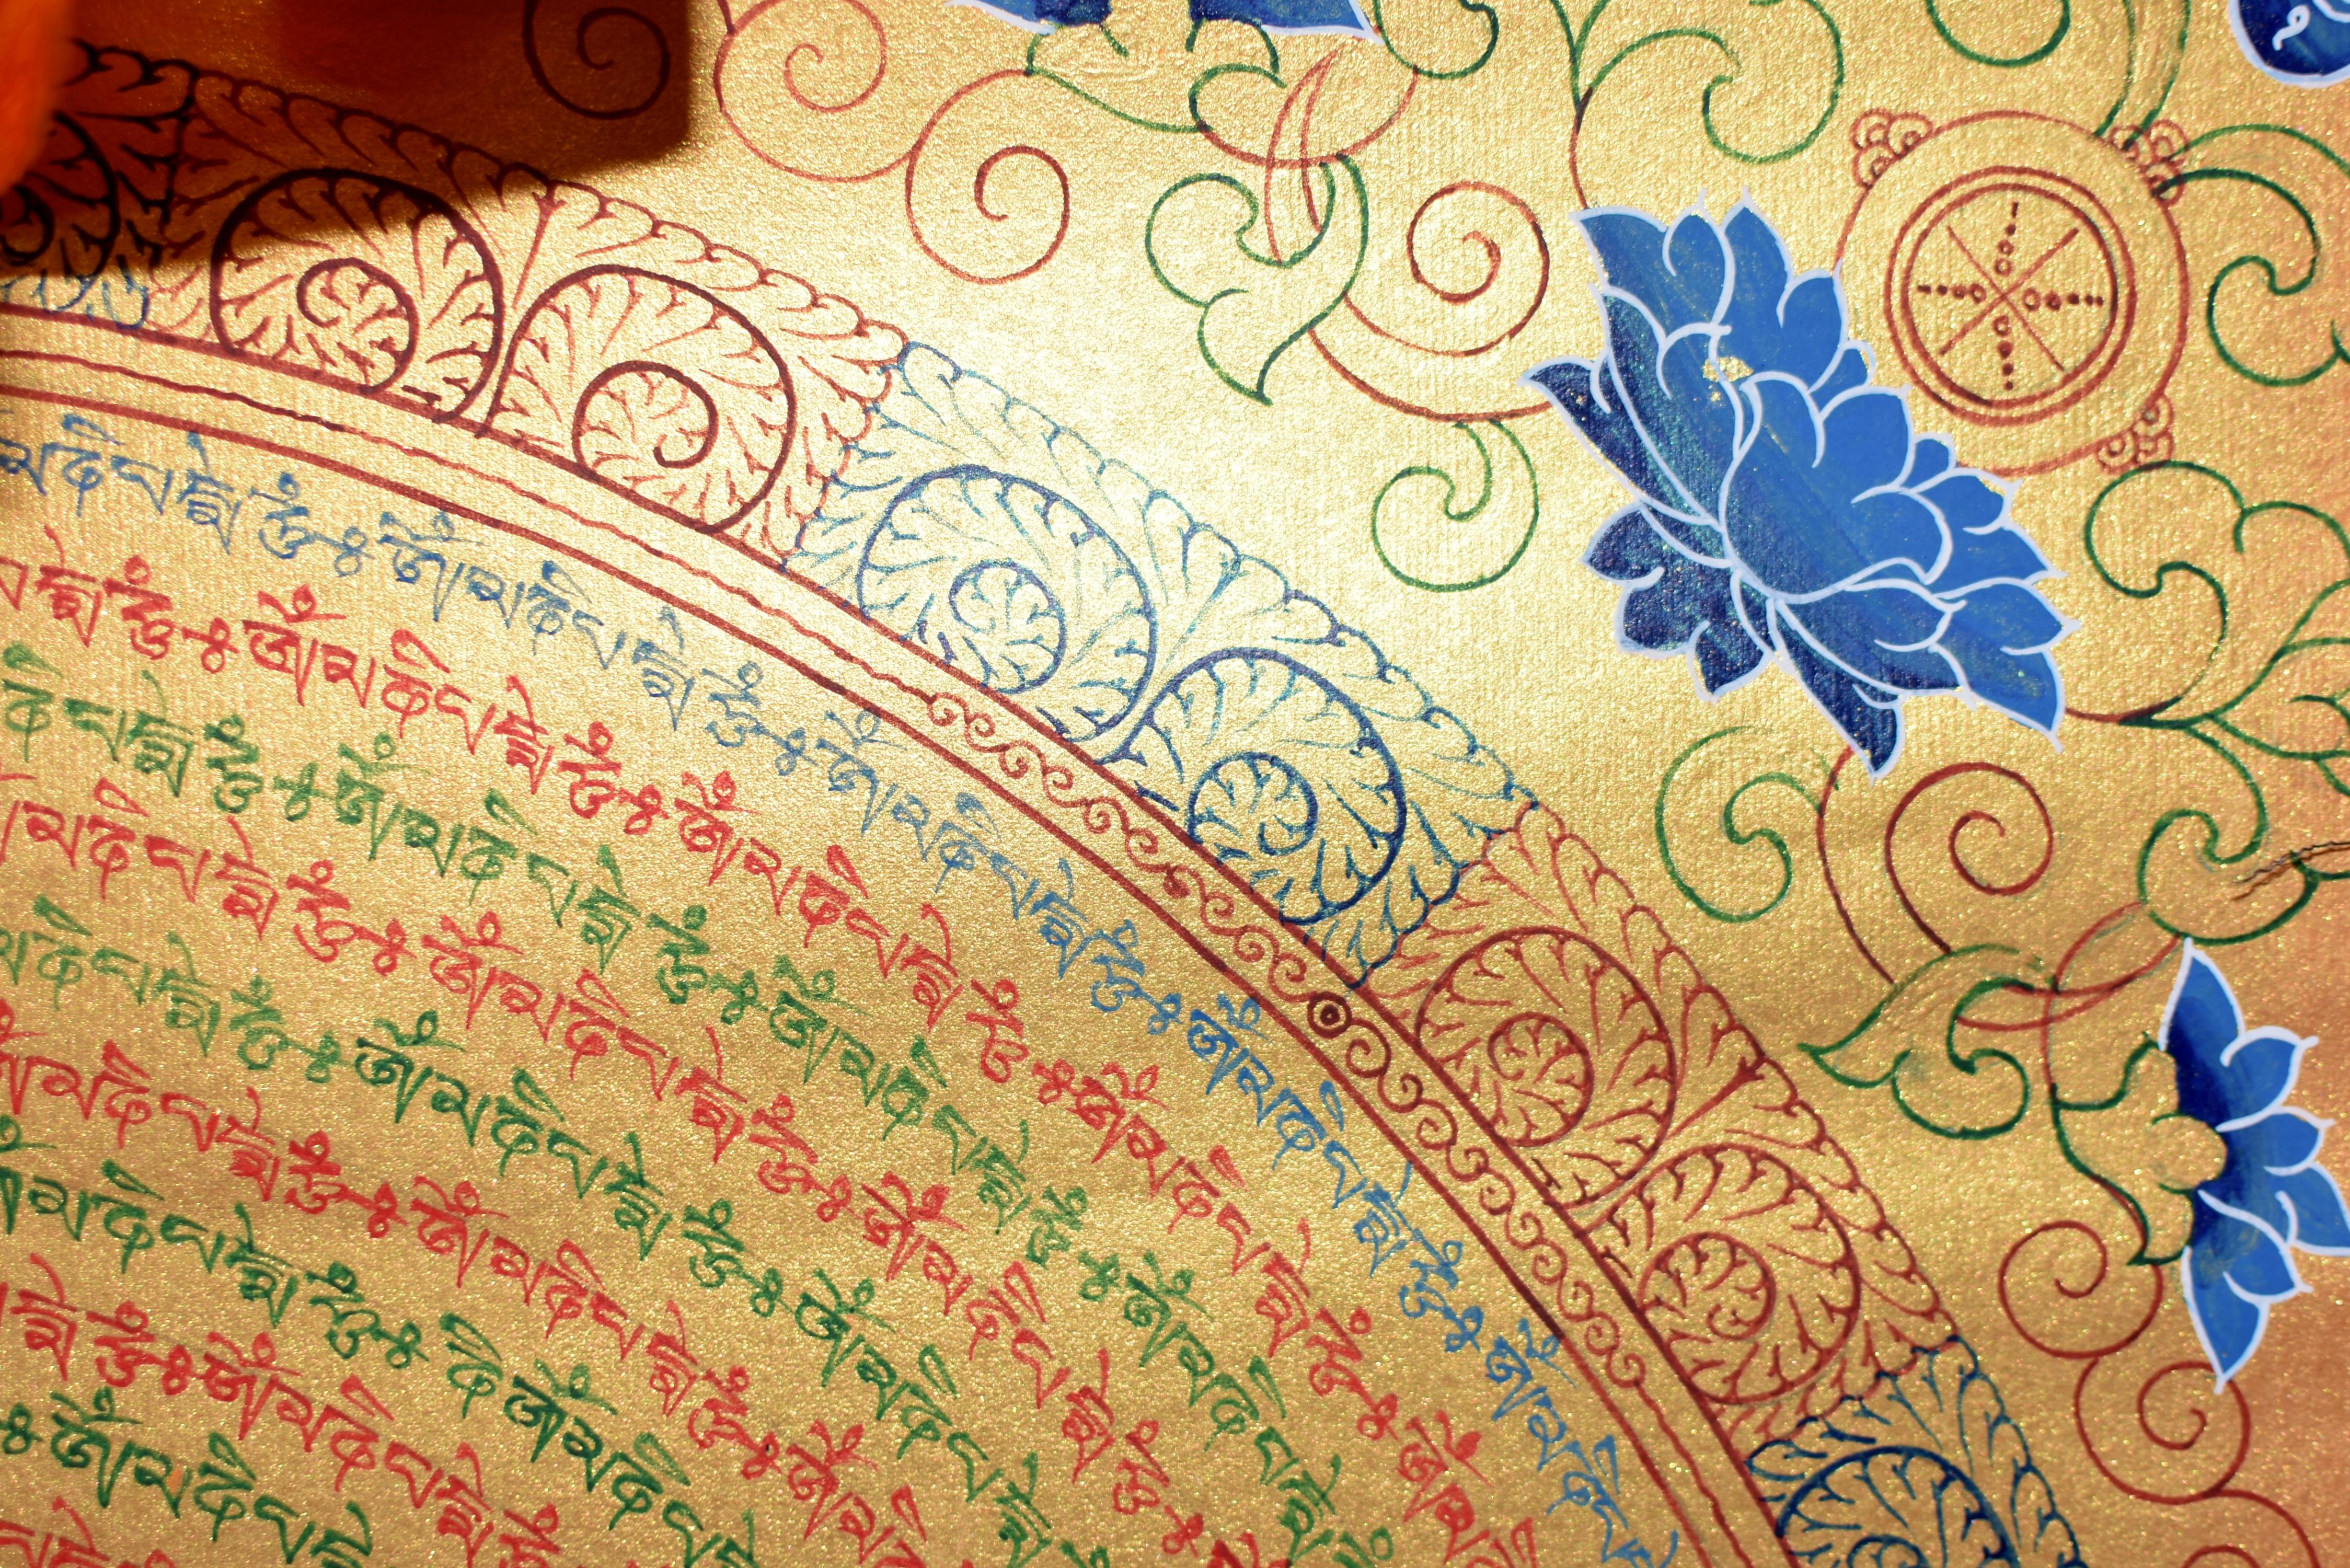 Hand-Painted Tibetan Painting Thangka Sanskrit Mandala Mantra Hand Painted Gilded For Sale